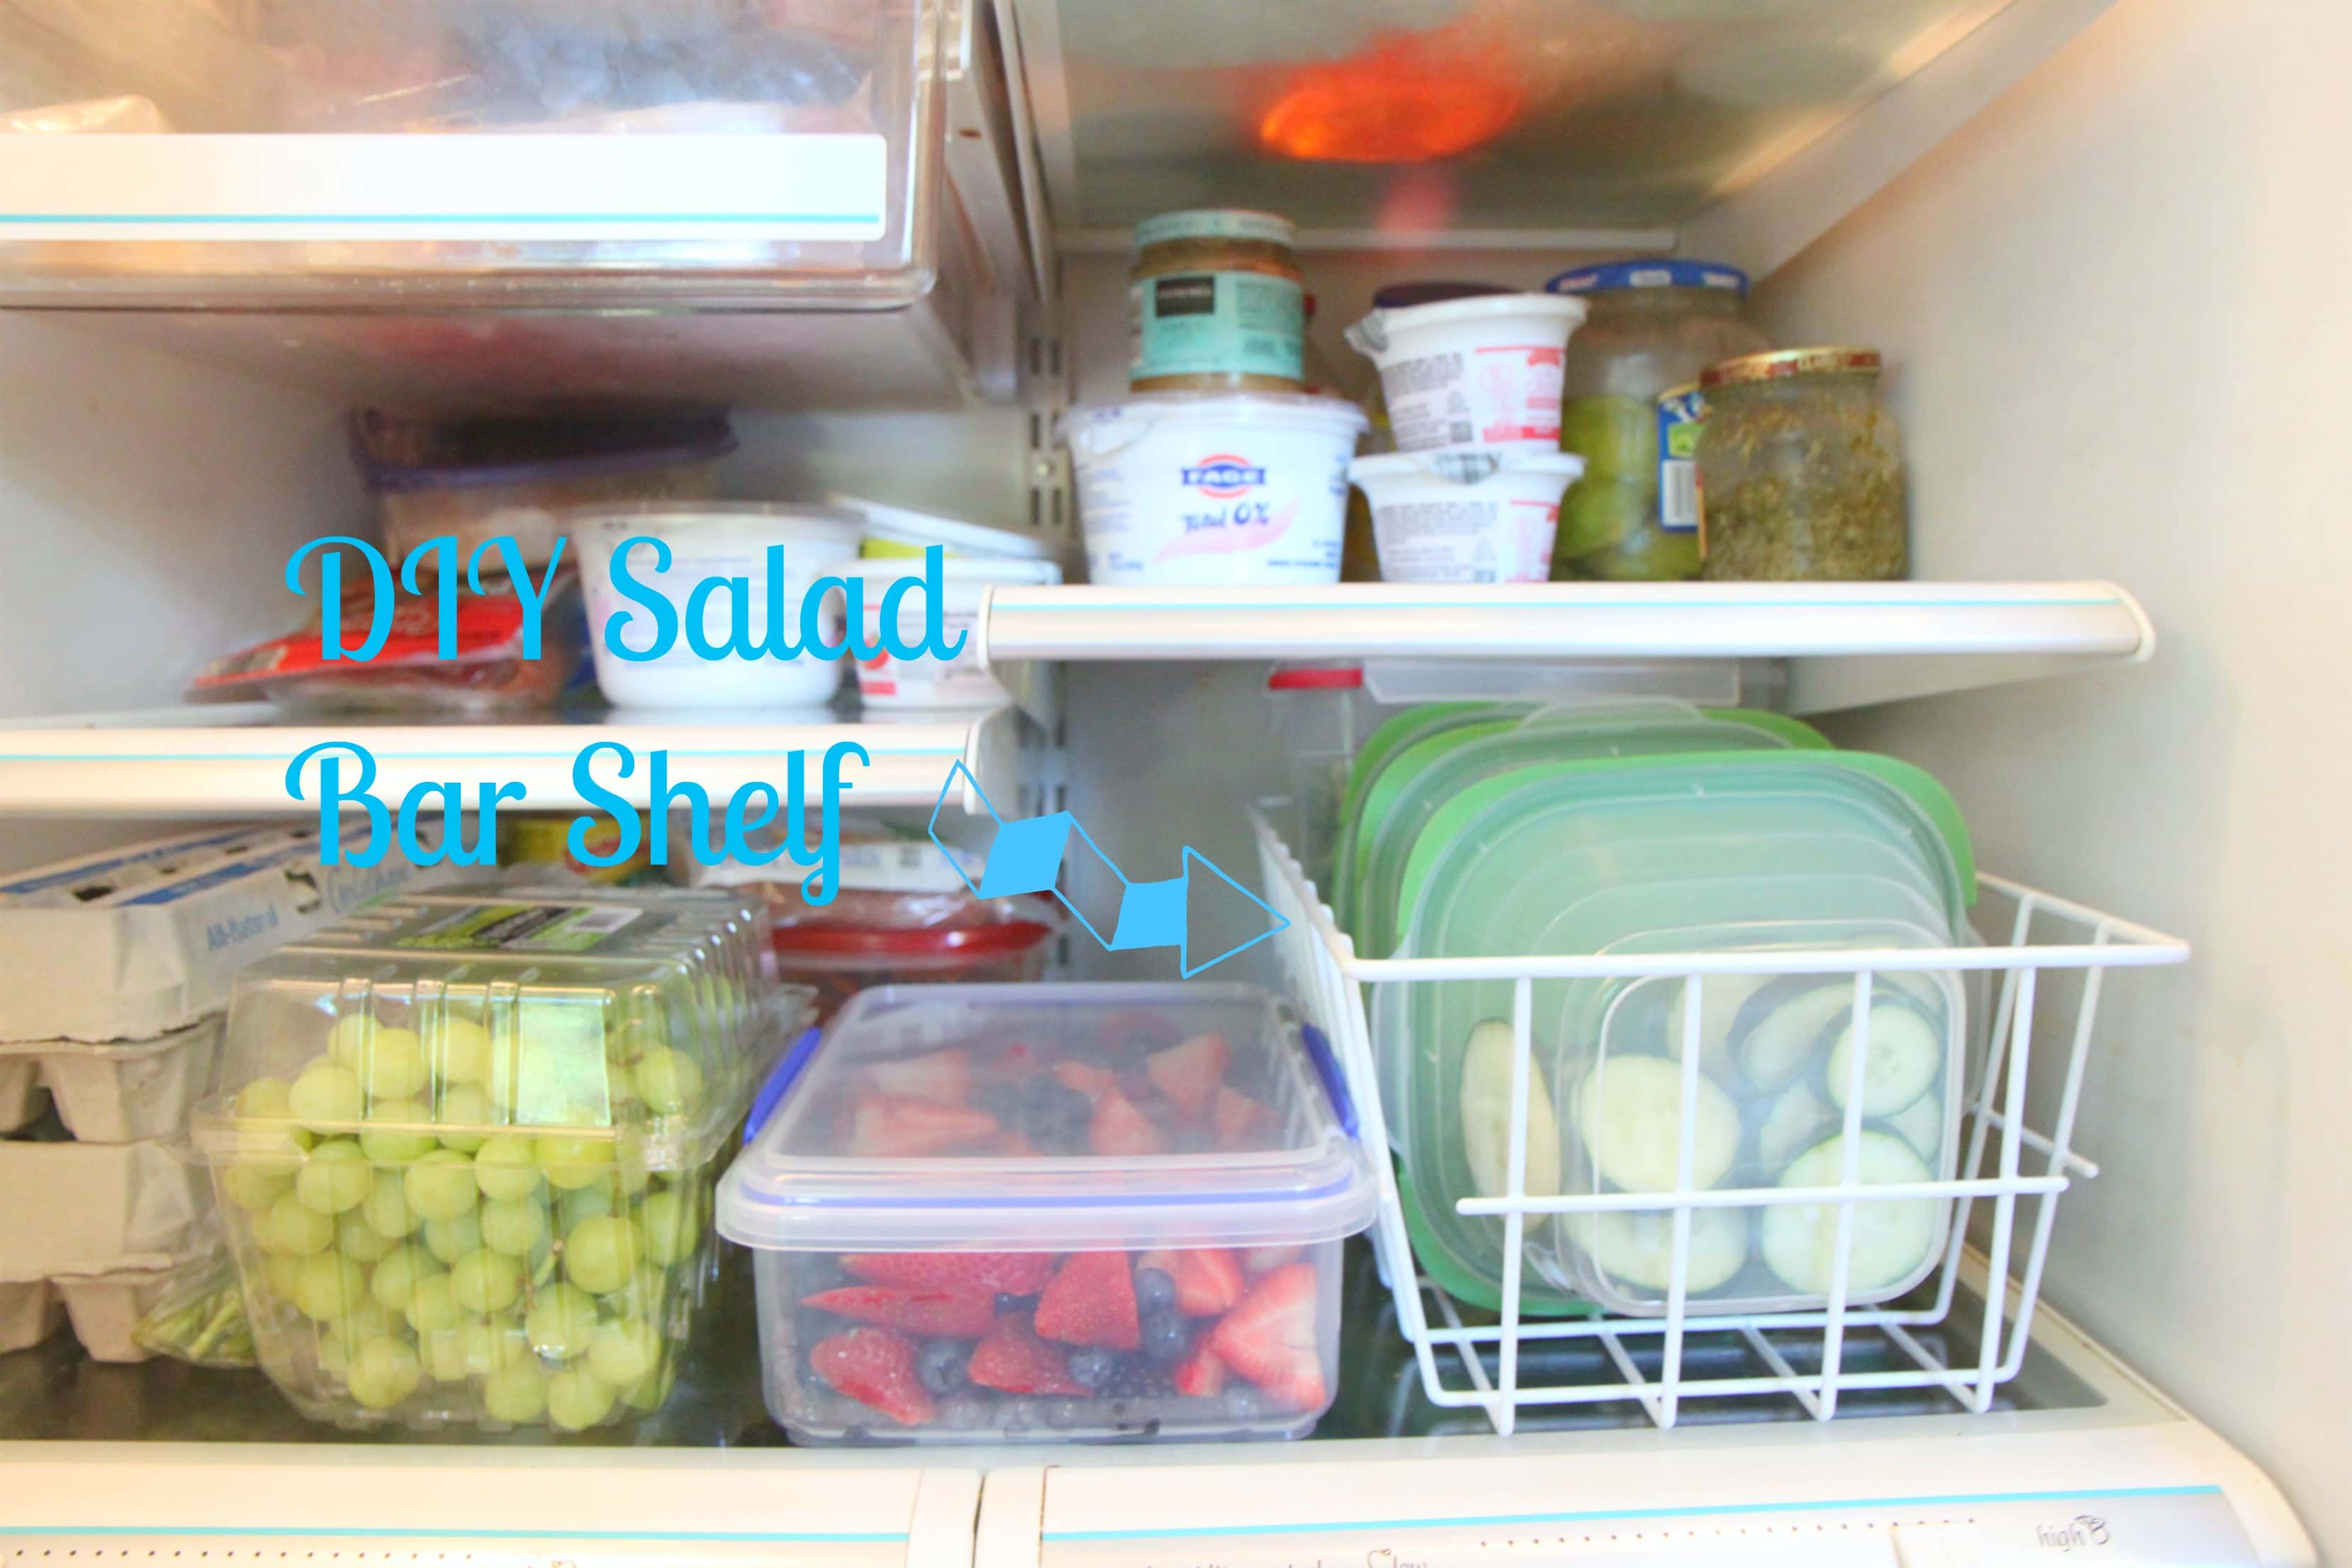 Cold Storage makes DIY salad bar more atas, so we review it atas